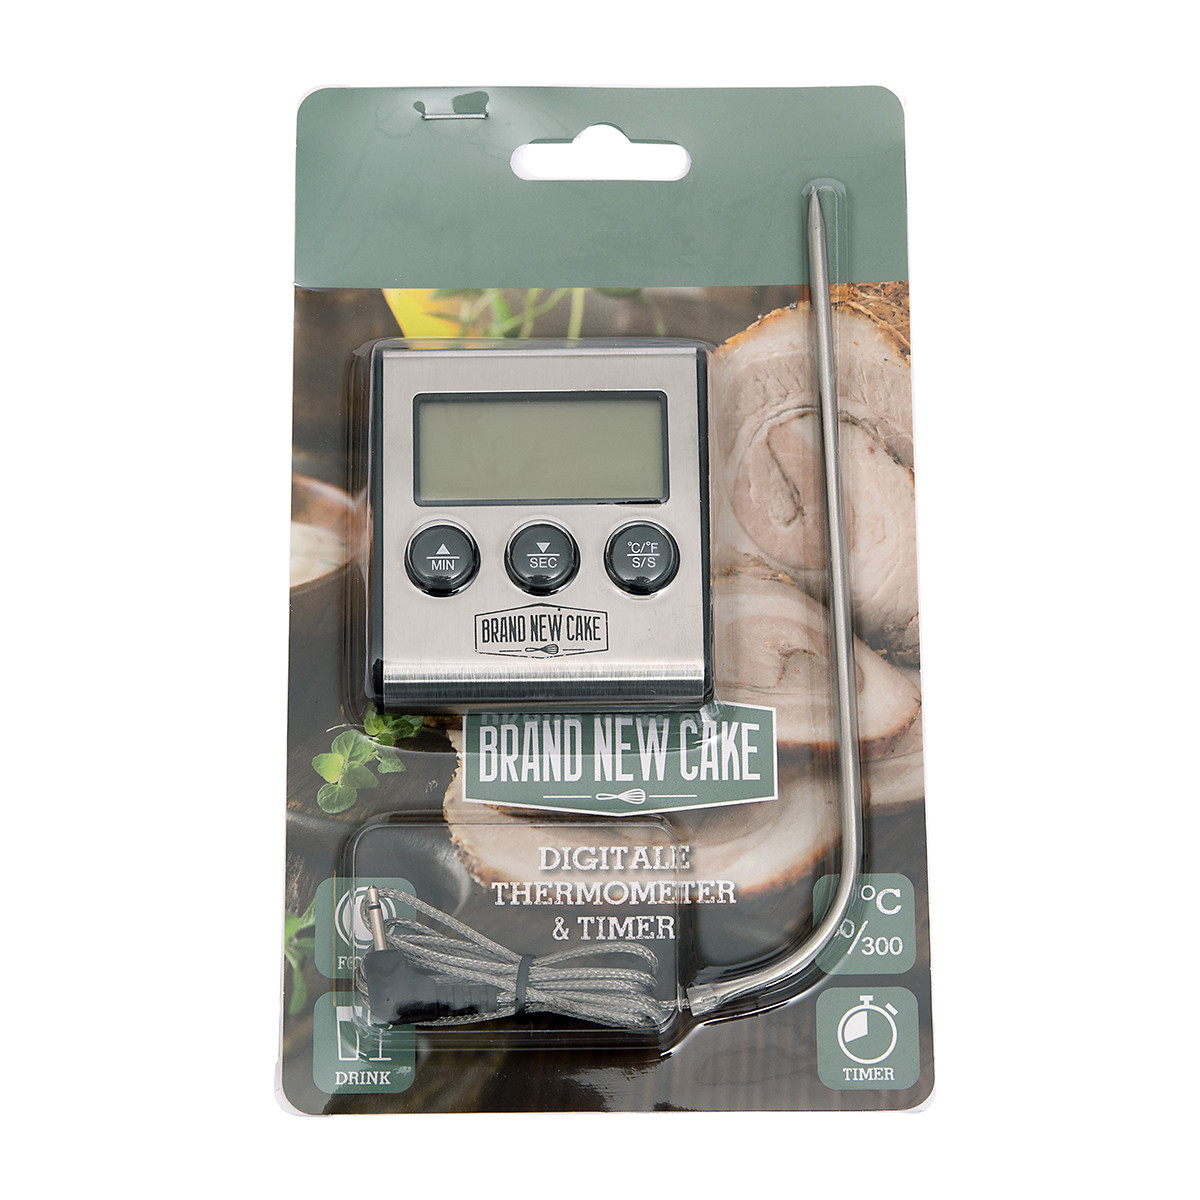 BrandNewCake Digitale Thermometer/Timer -50 tot 300°C